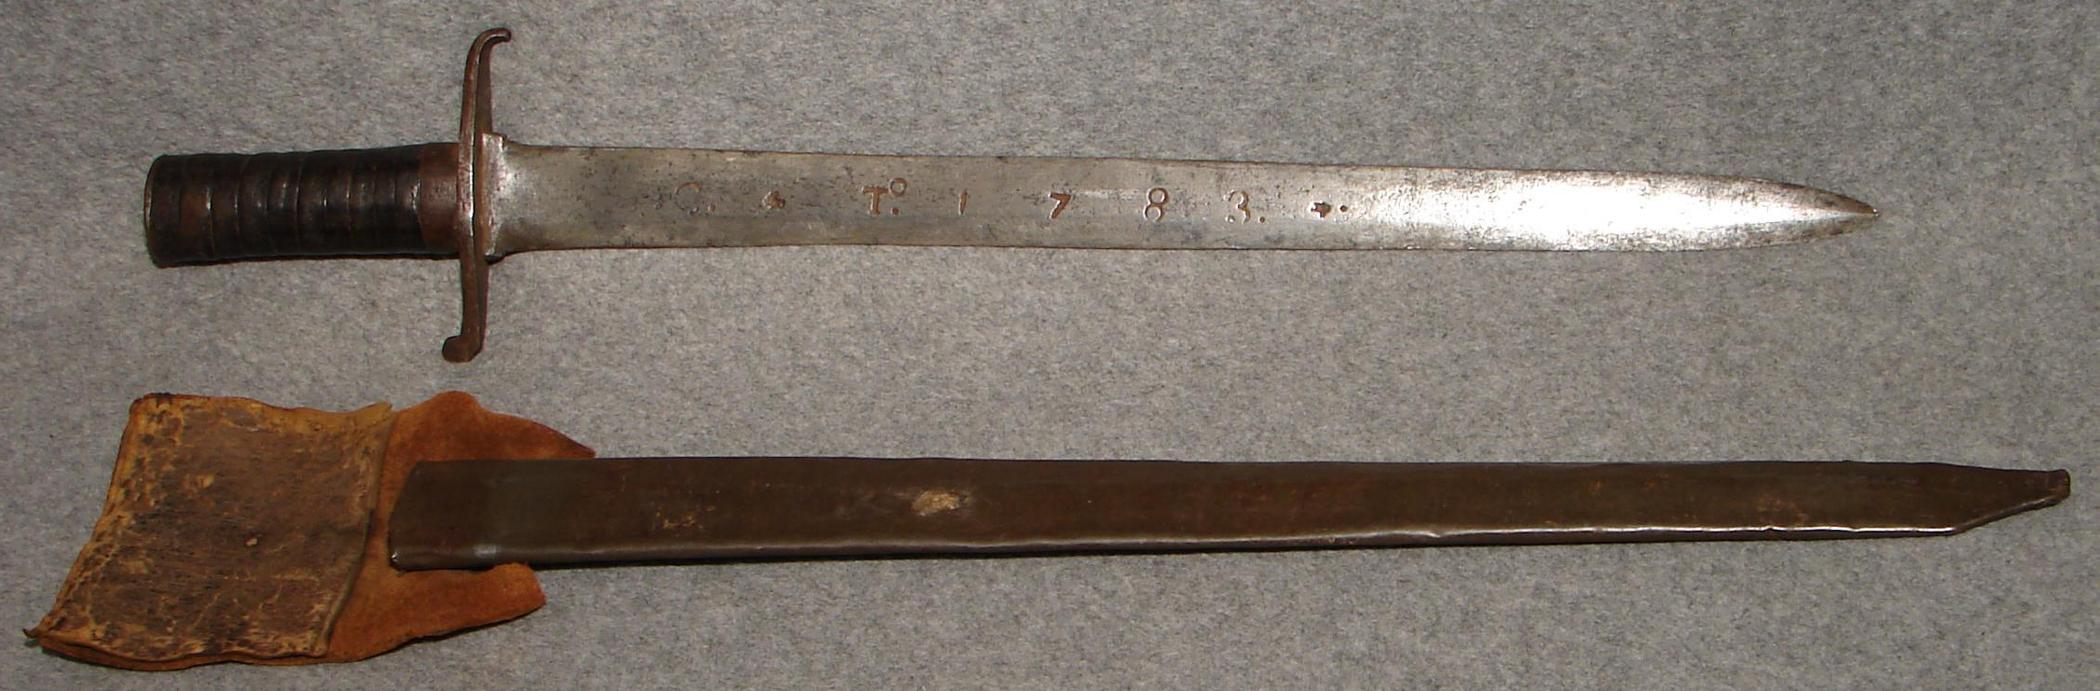 Sword-Short-1783-A-oa&scab.jpg